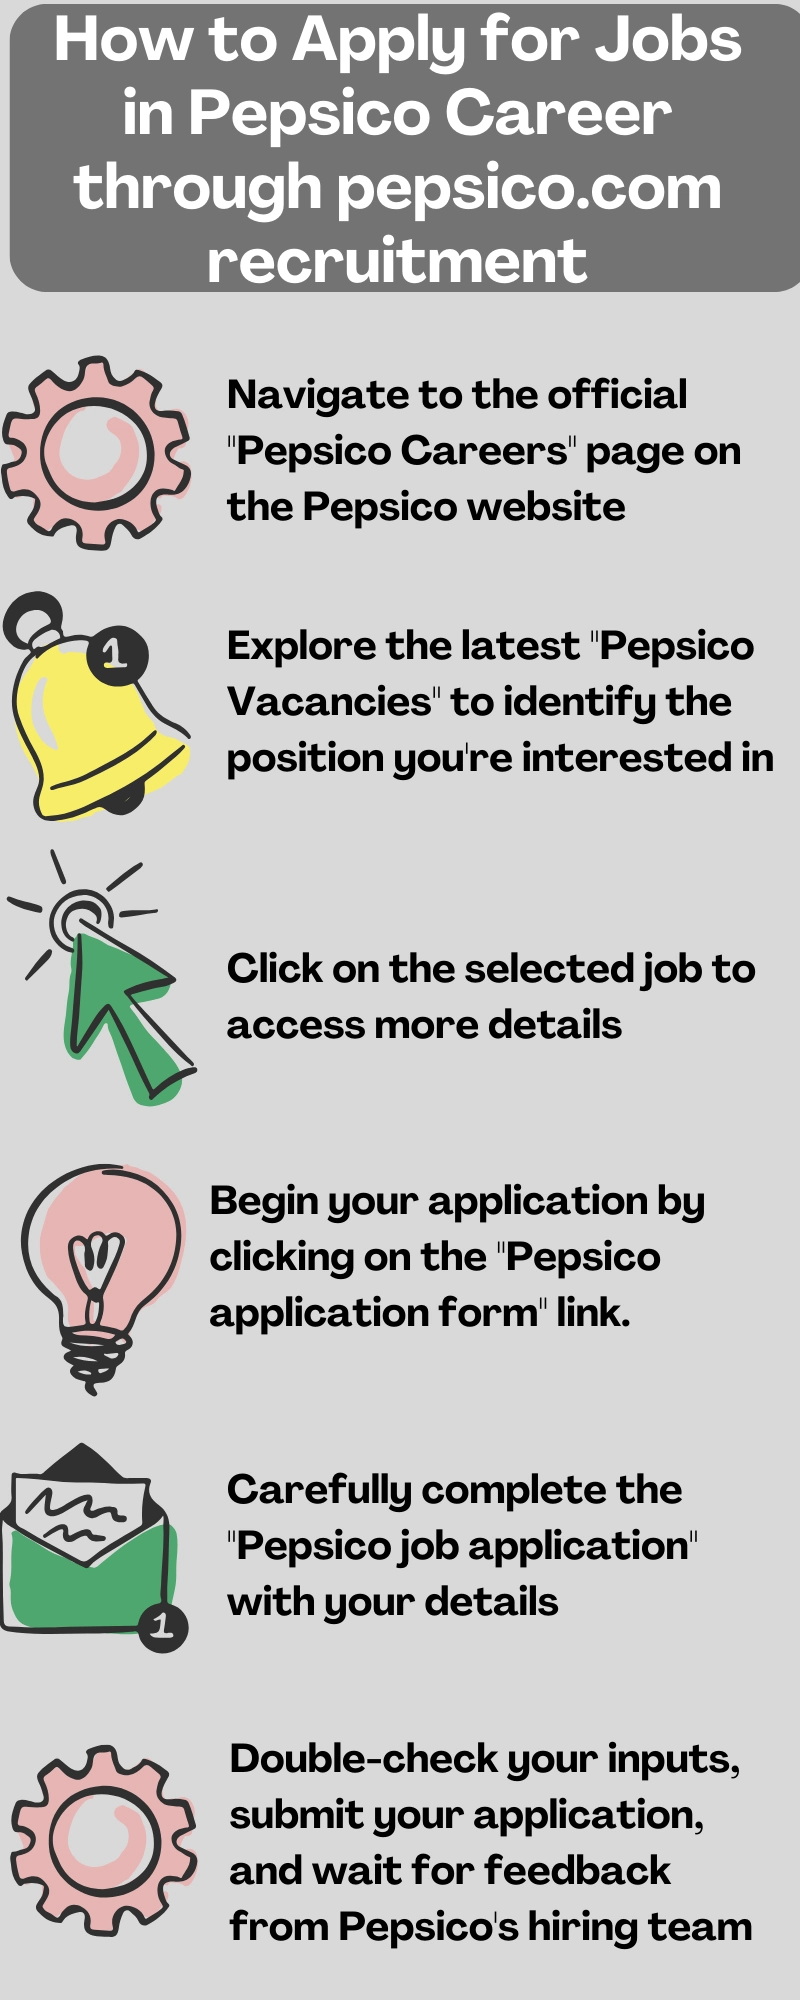 How to Apply for Jobs in Pepsico Career through pepsico.com recruitment?